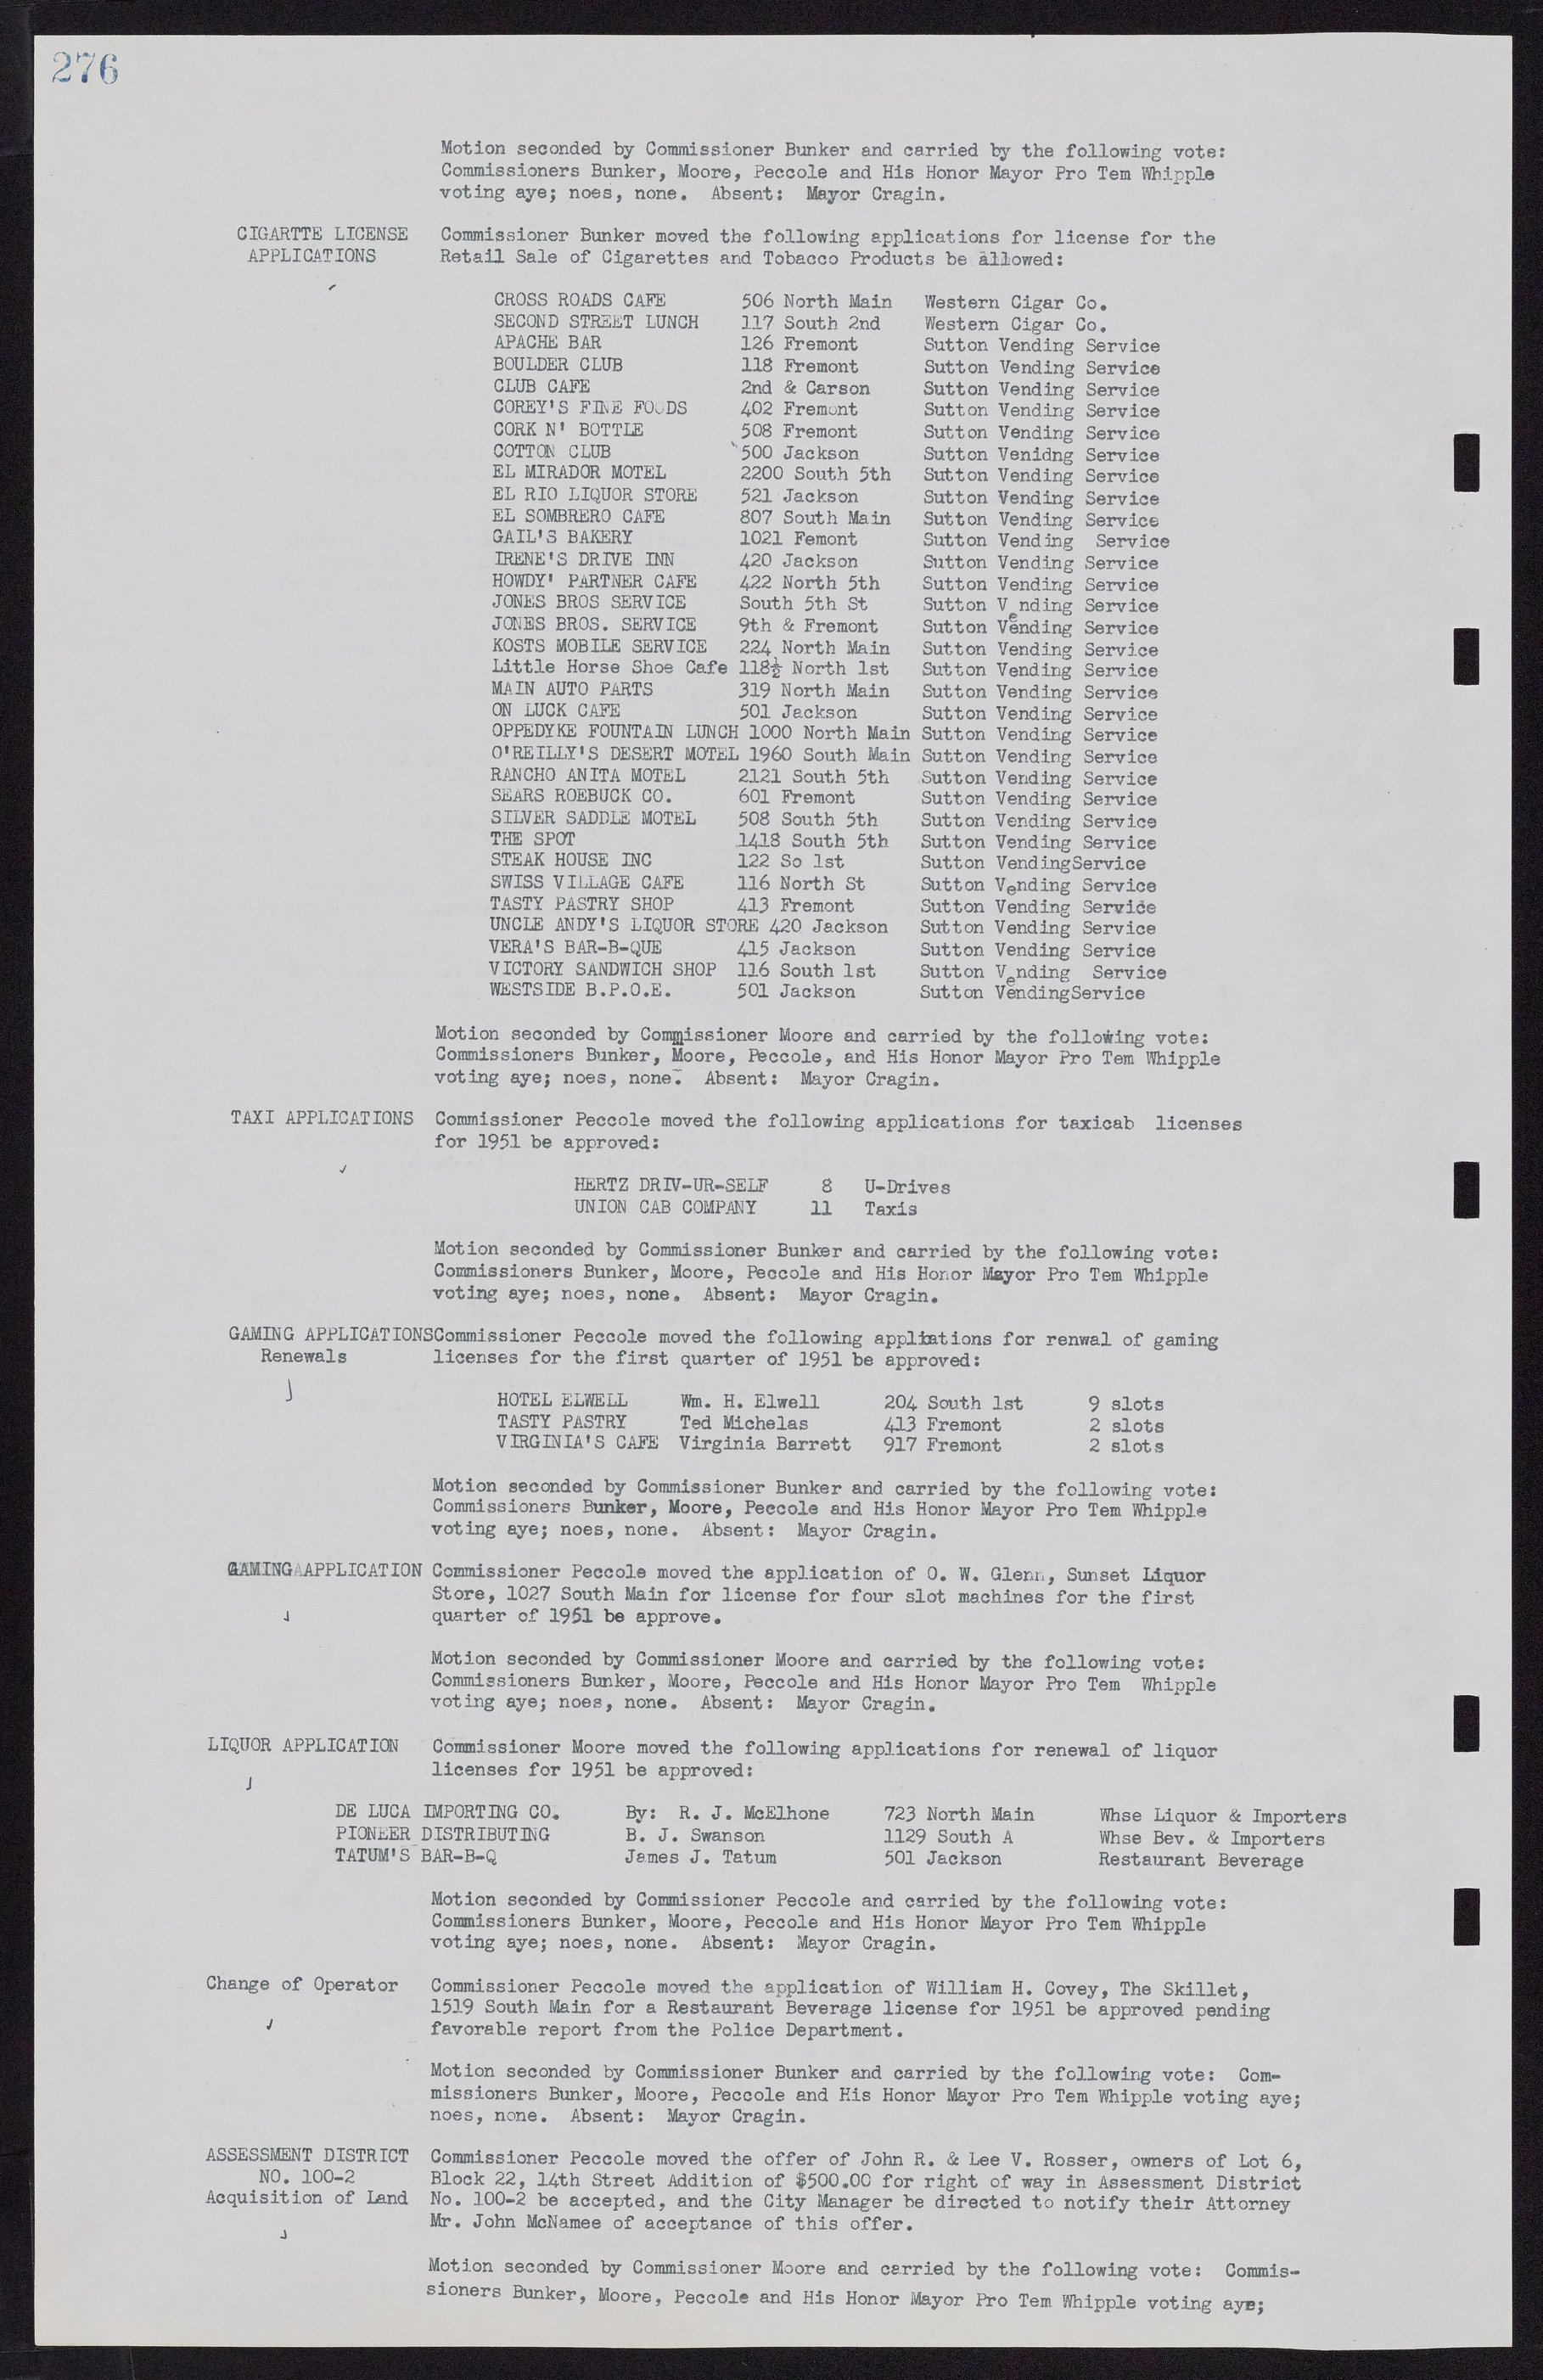 Las Vegas City Commission Minutes, November 7, 1949 to May 21, 1952, lvc000007-288